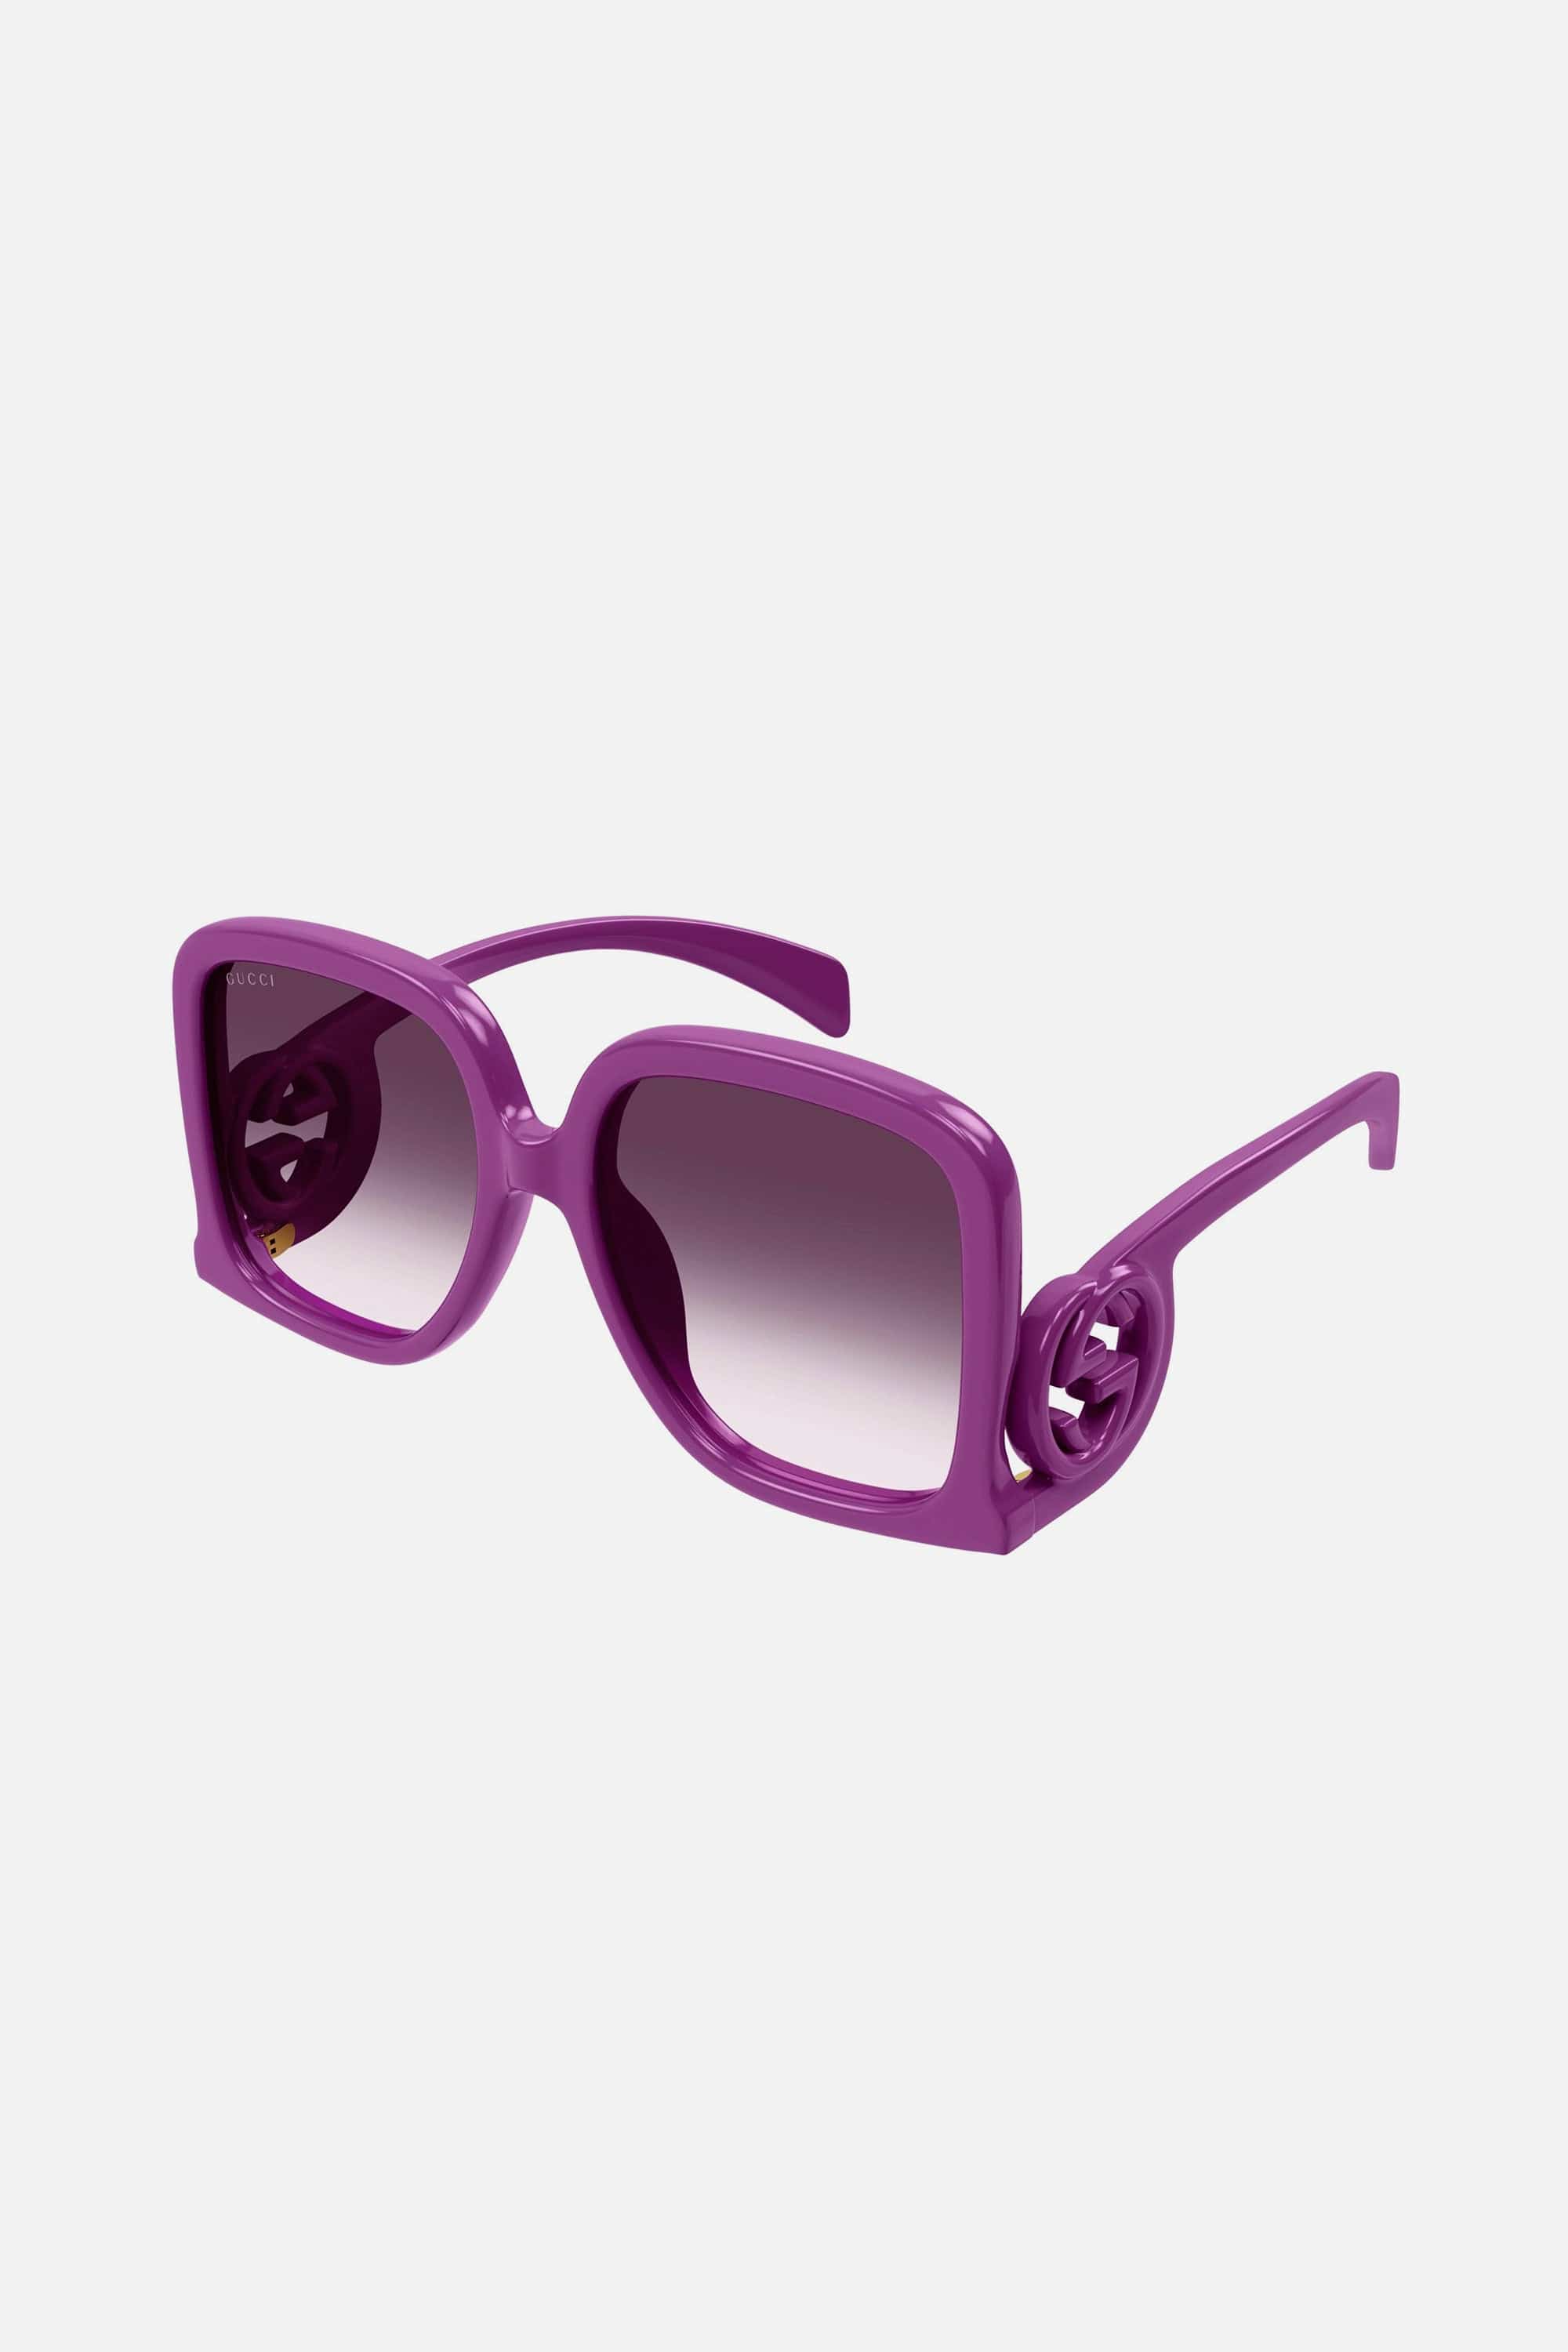 Gucci fuchsia butterfly shape sunglasses - Eyewear Club